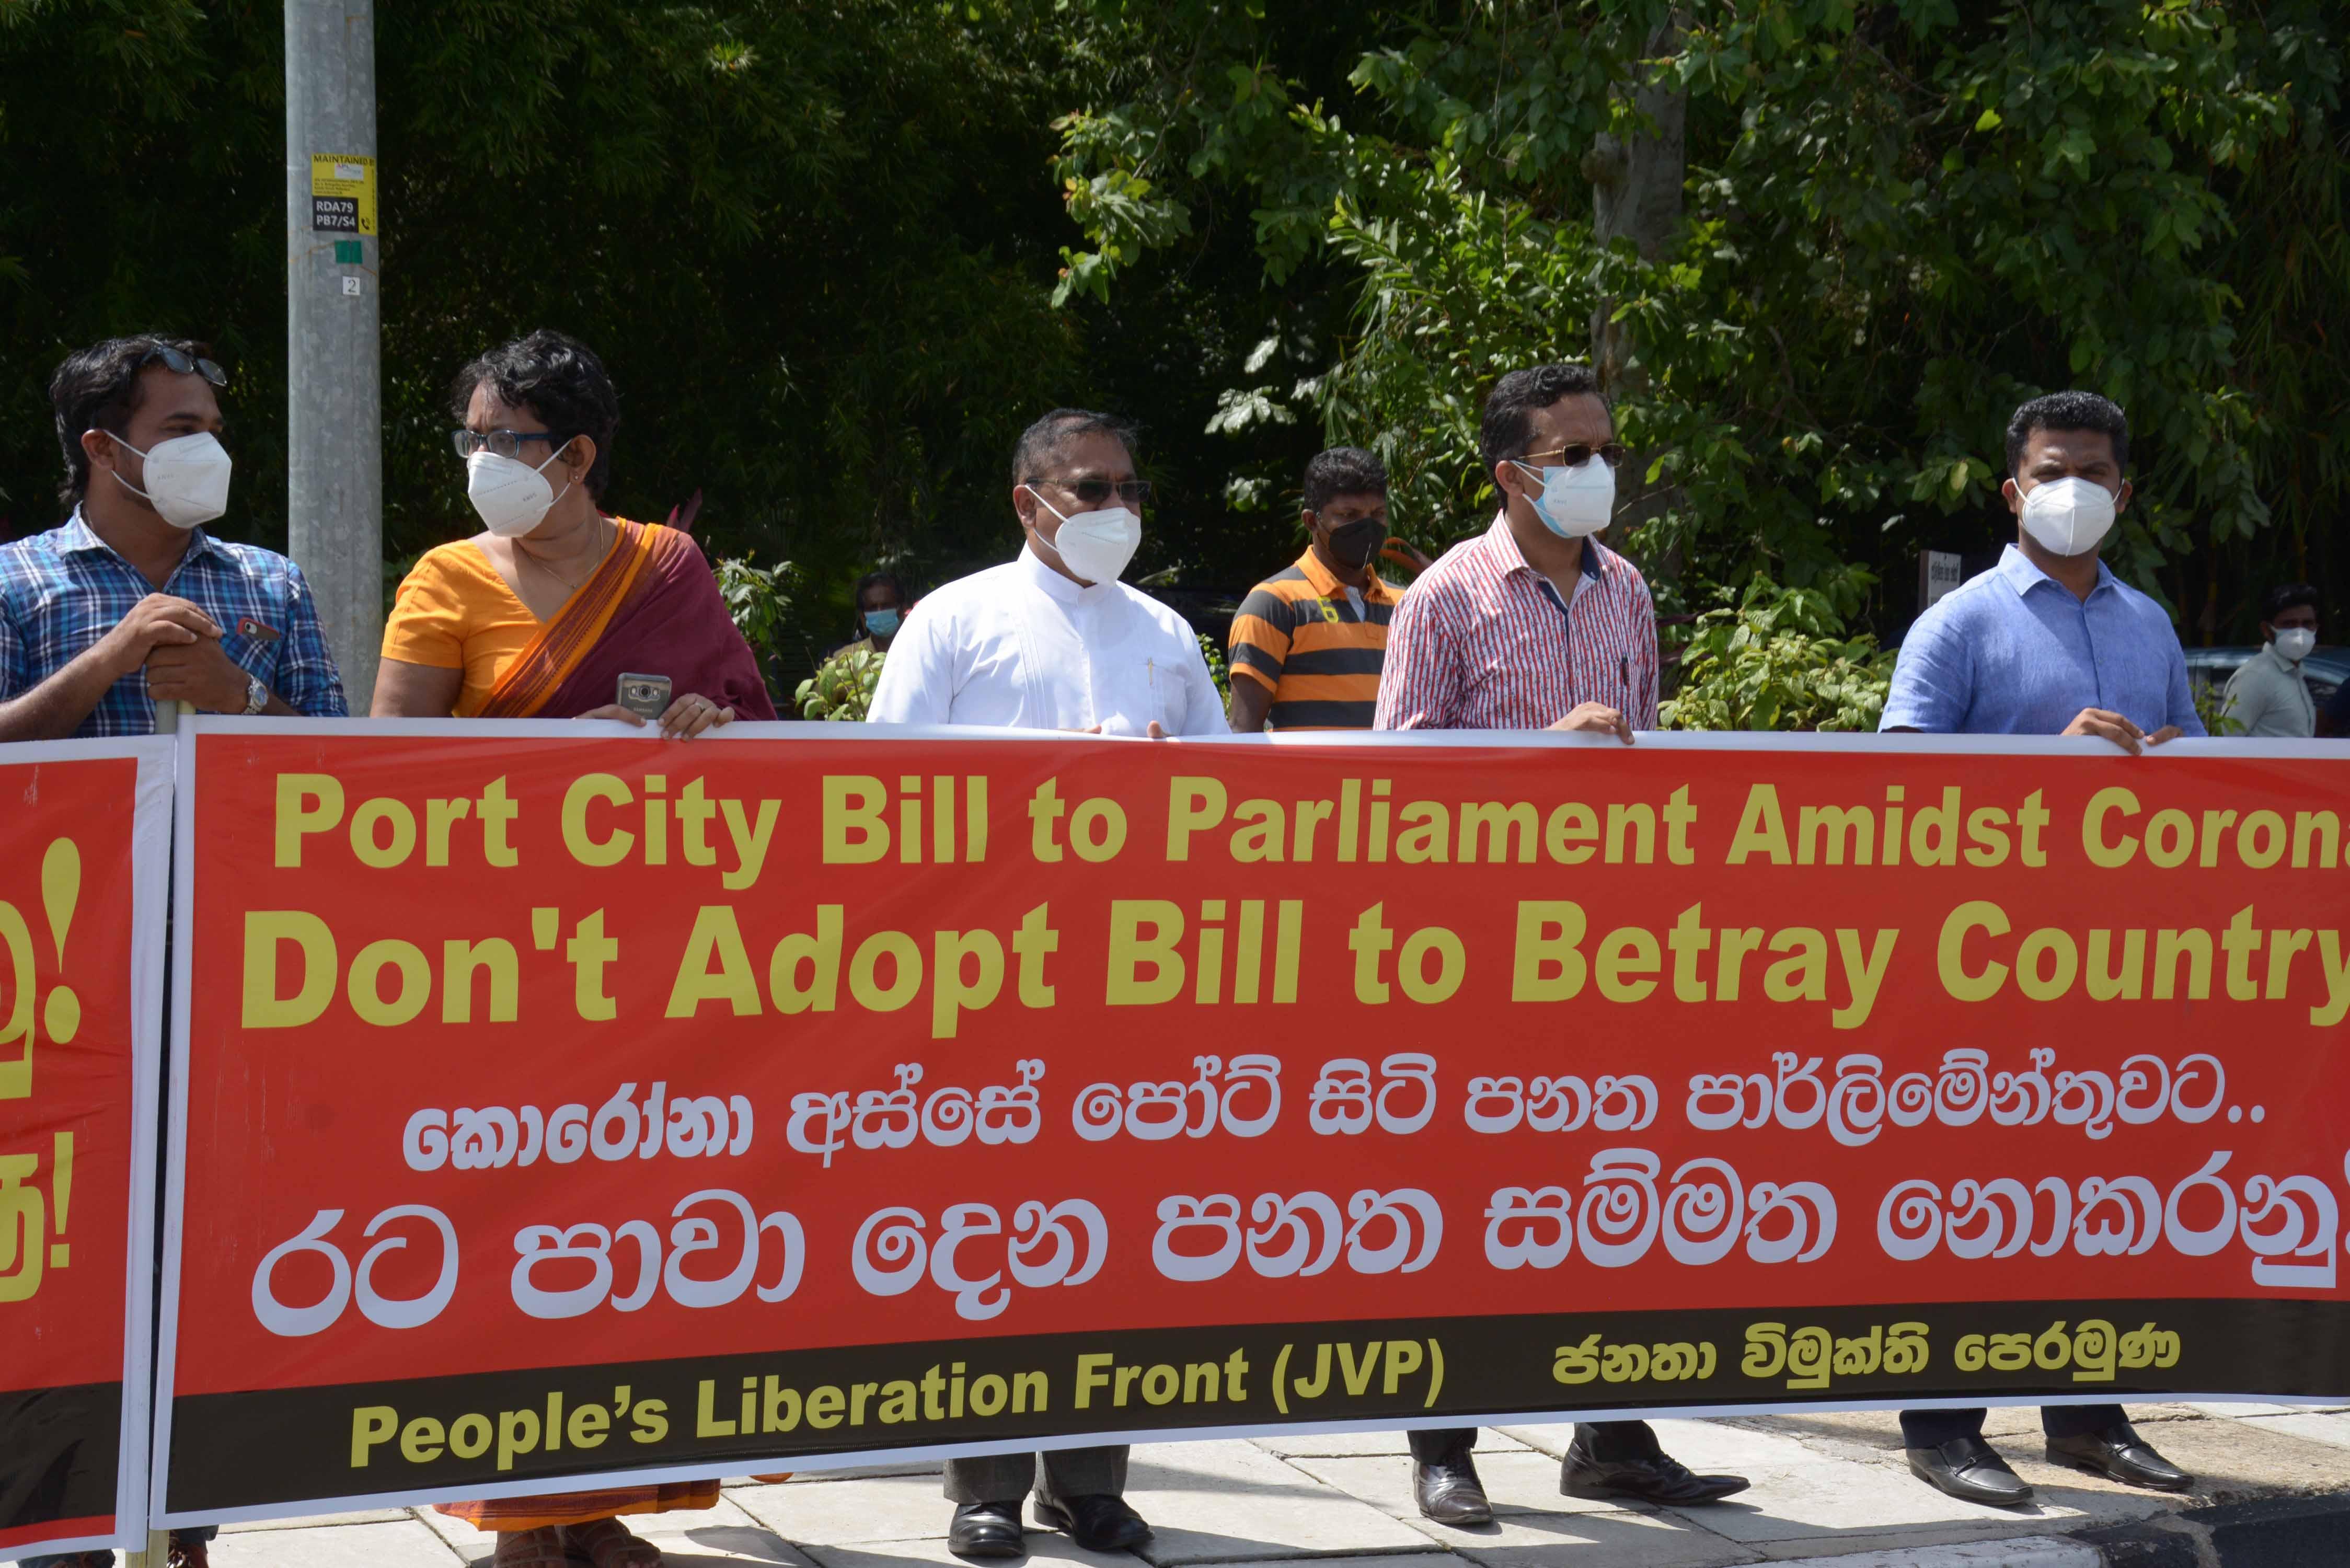 JVP protest against Port City Bill